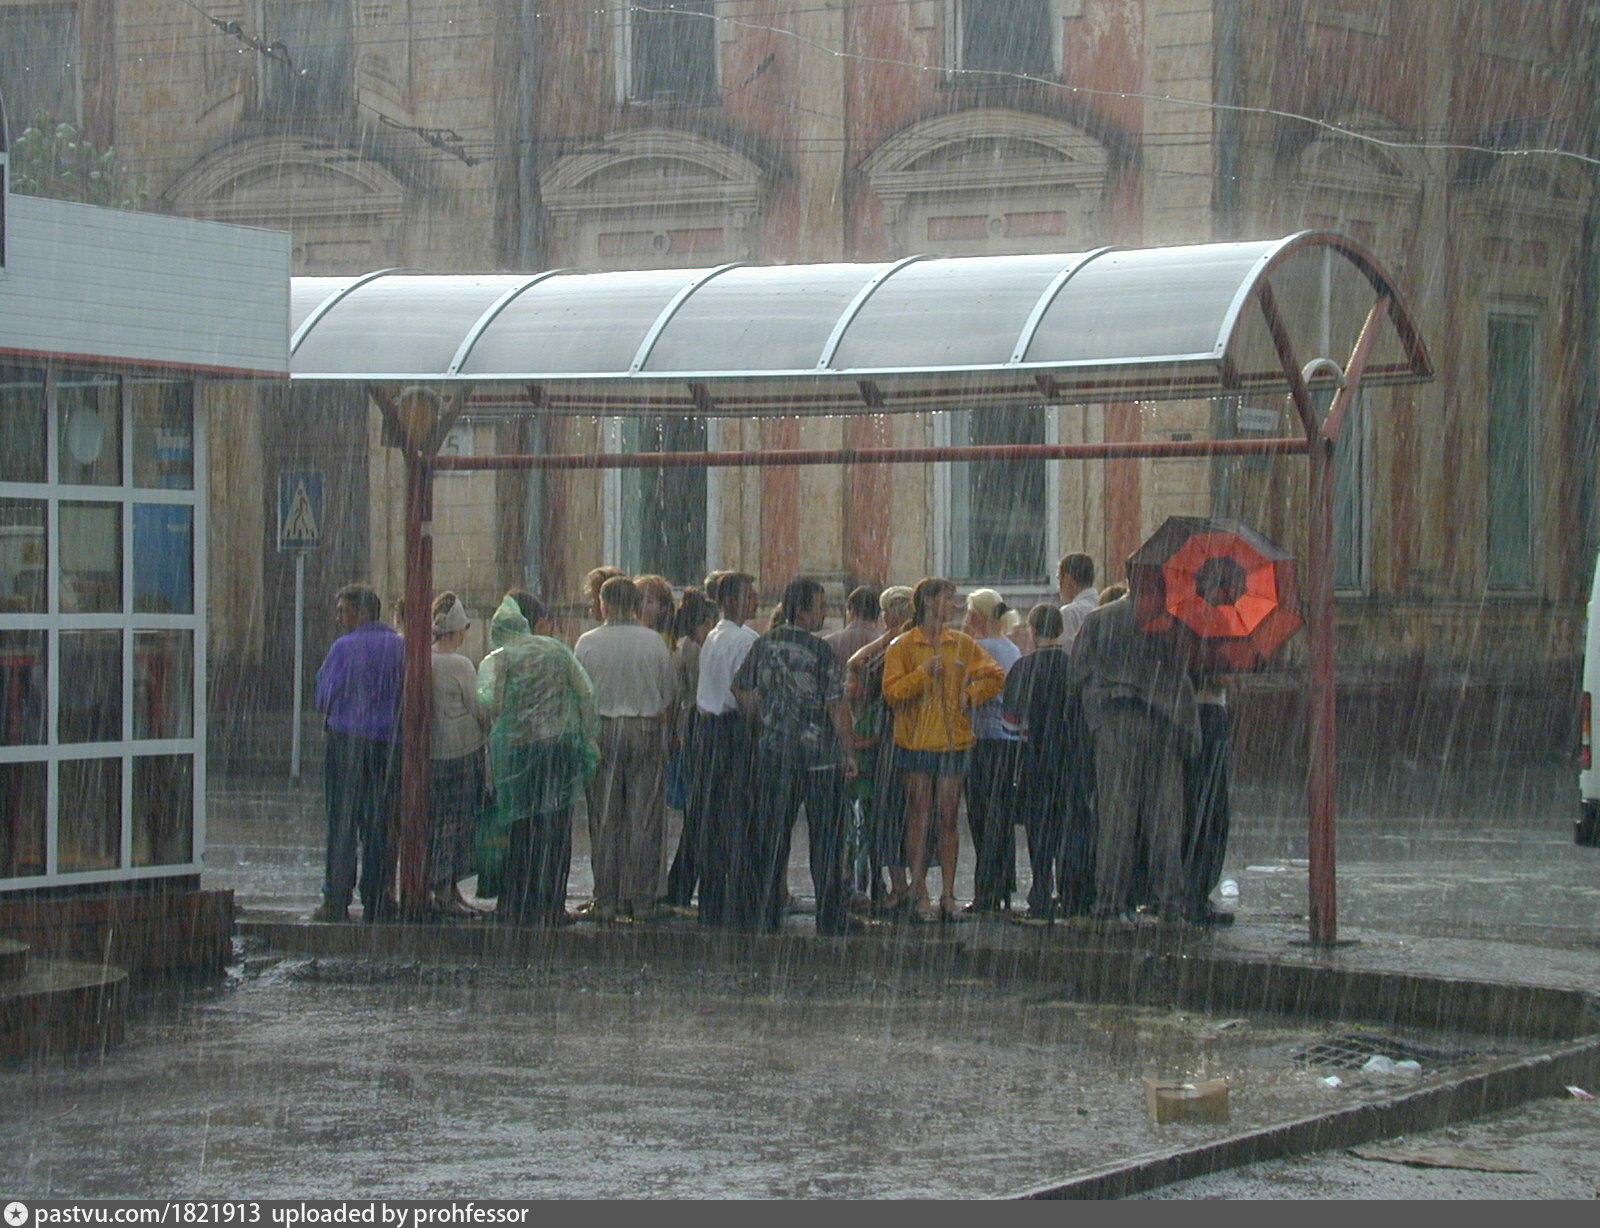 Дождь ливший без перерыва. Ливень остановка. Люди на остановке осень. Остановка осенью. Люди на остановке в дождь.